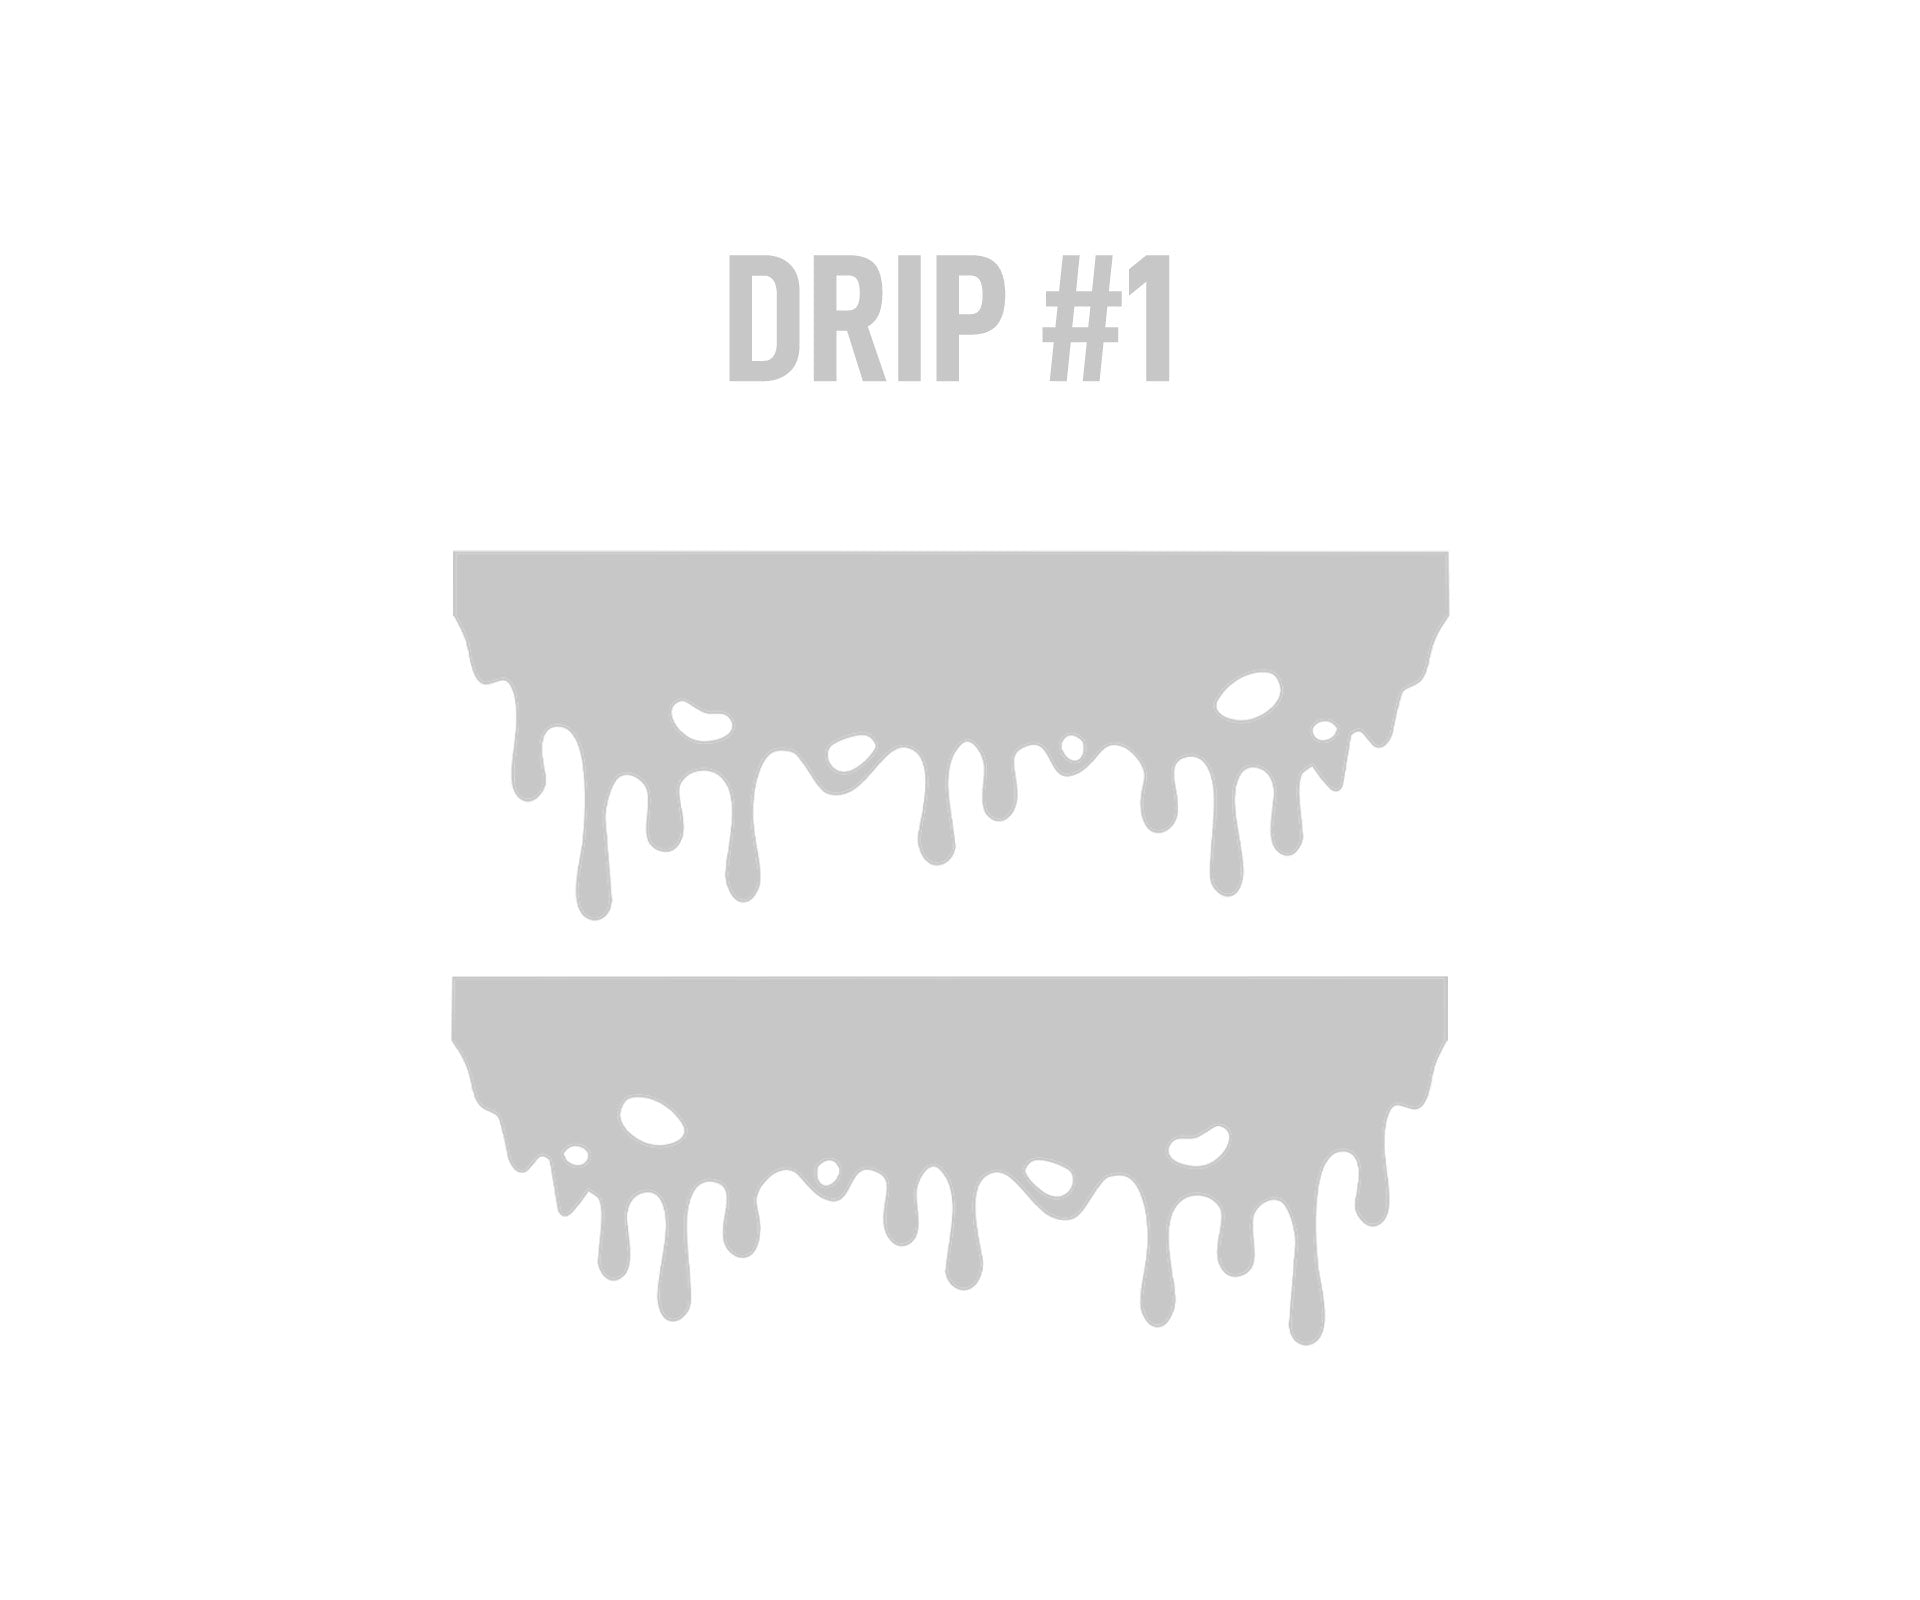 Melting Drip Dripping Sneaker Shoes Quality Vinyl Stencil Kit 